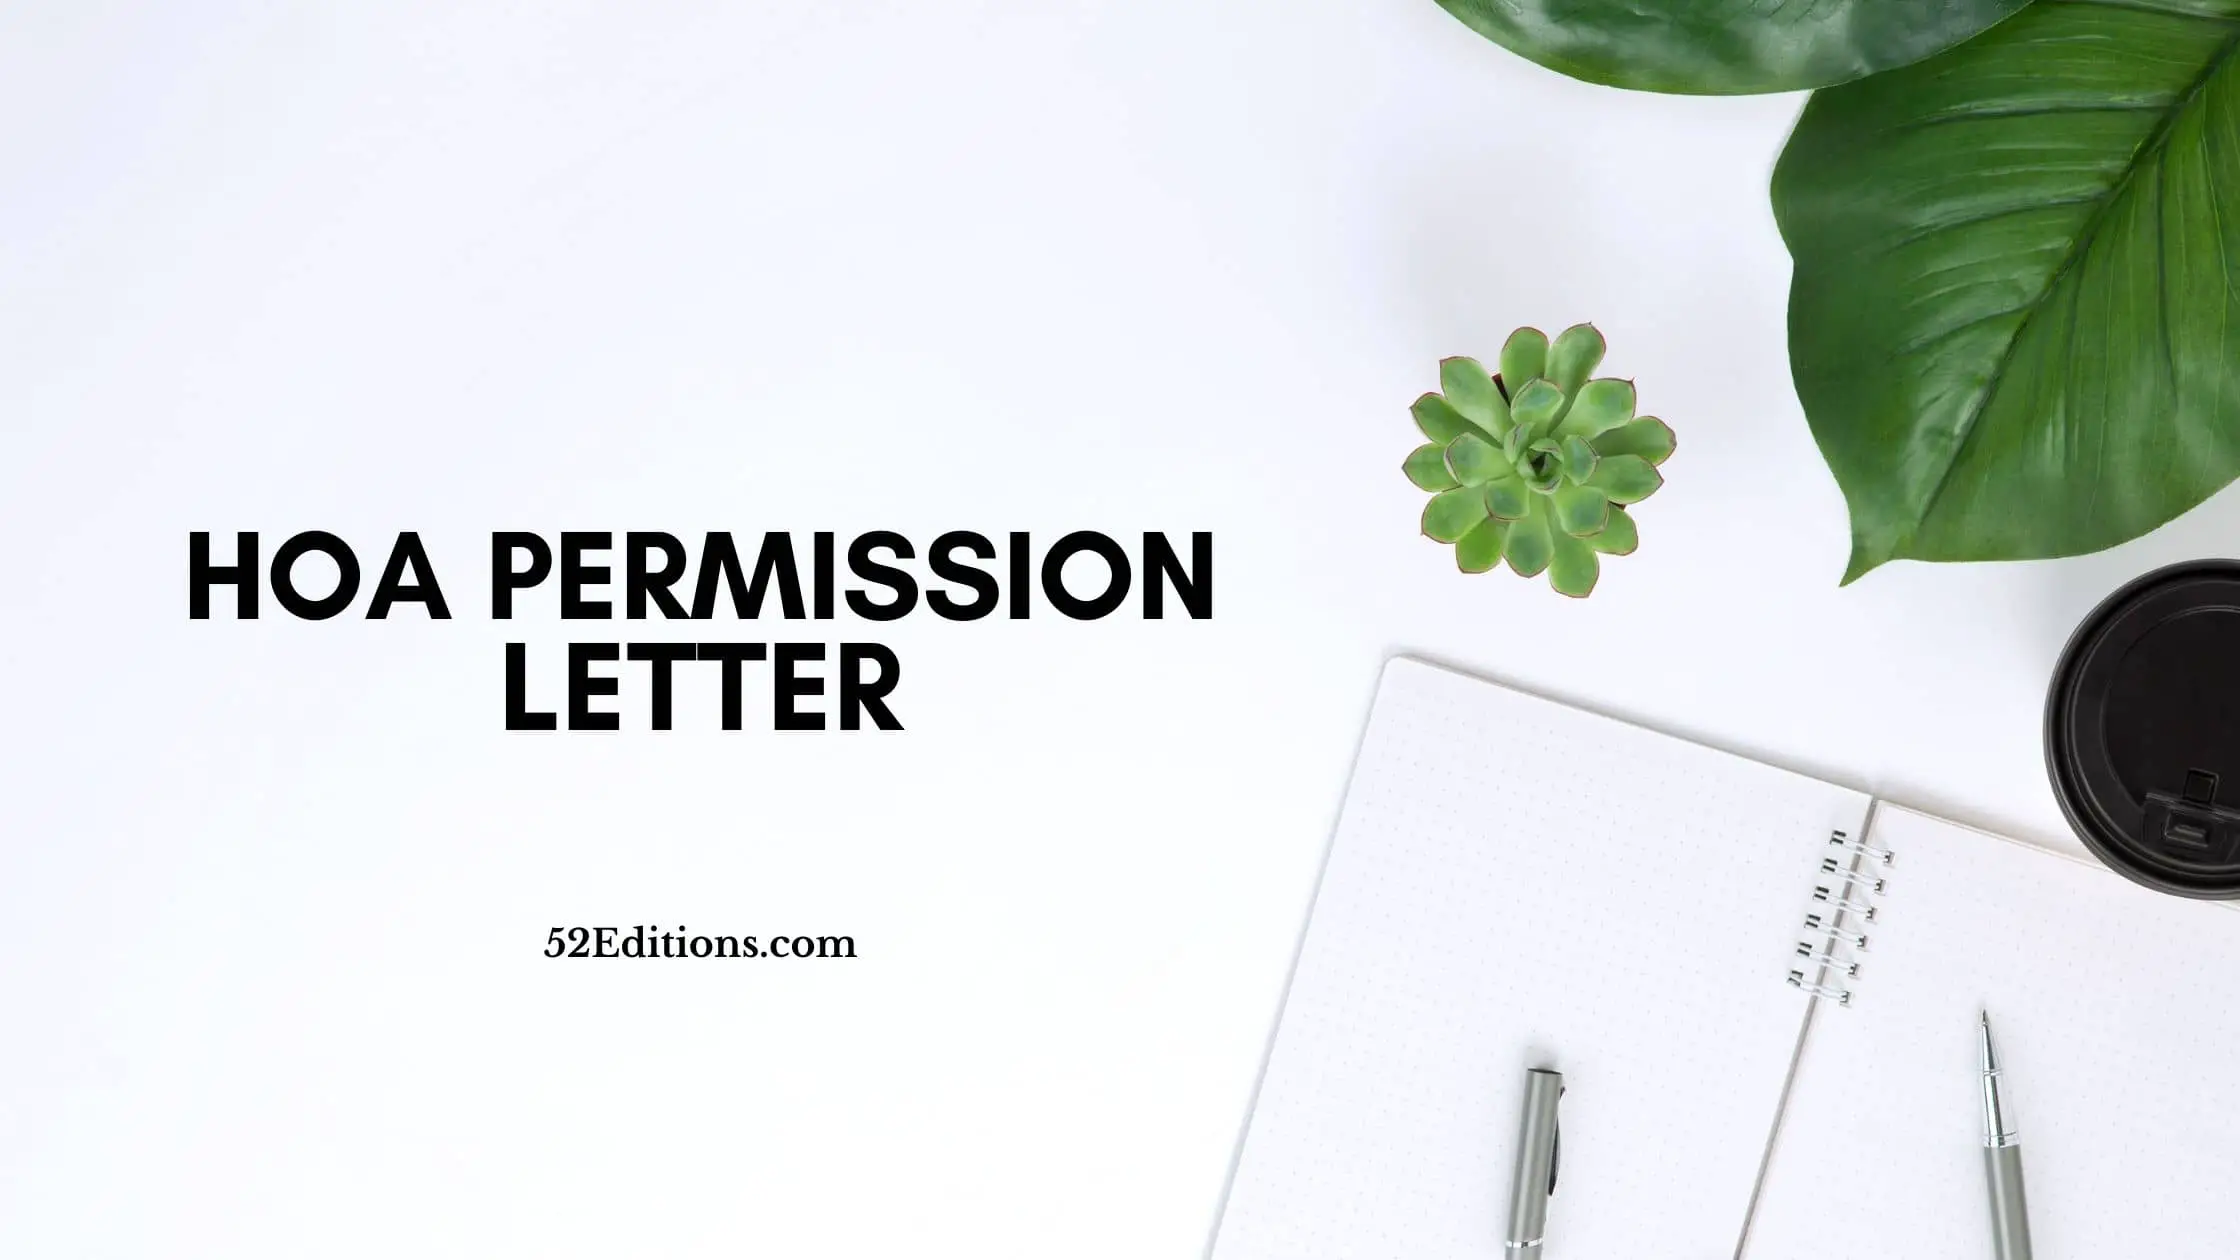 HOA Permission Letter // FREE Letter Templates